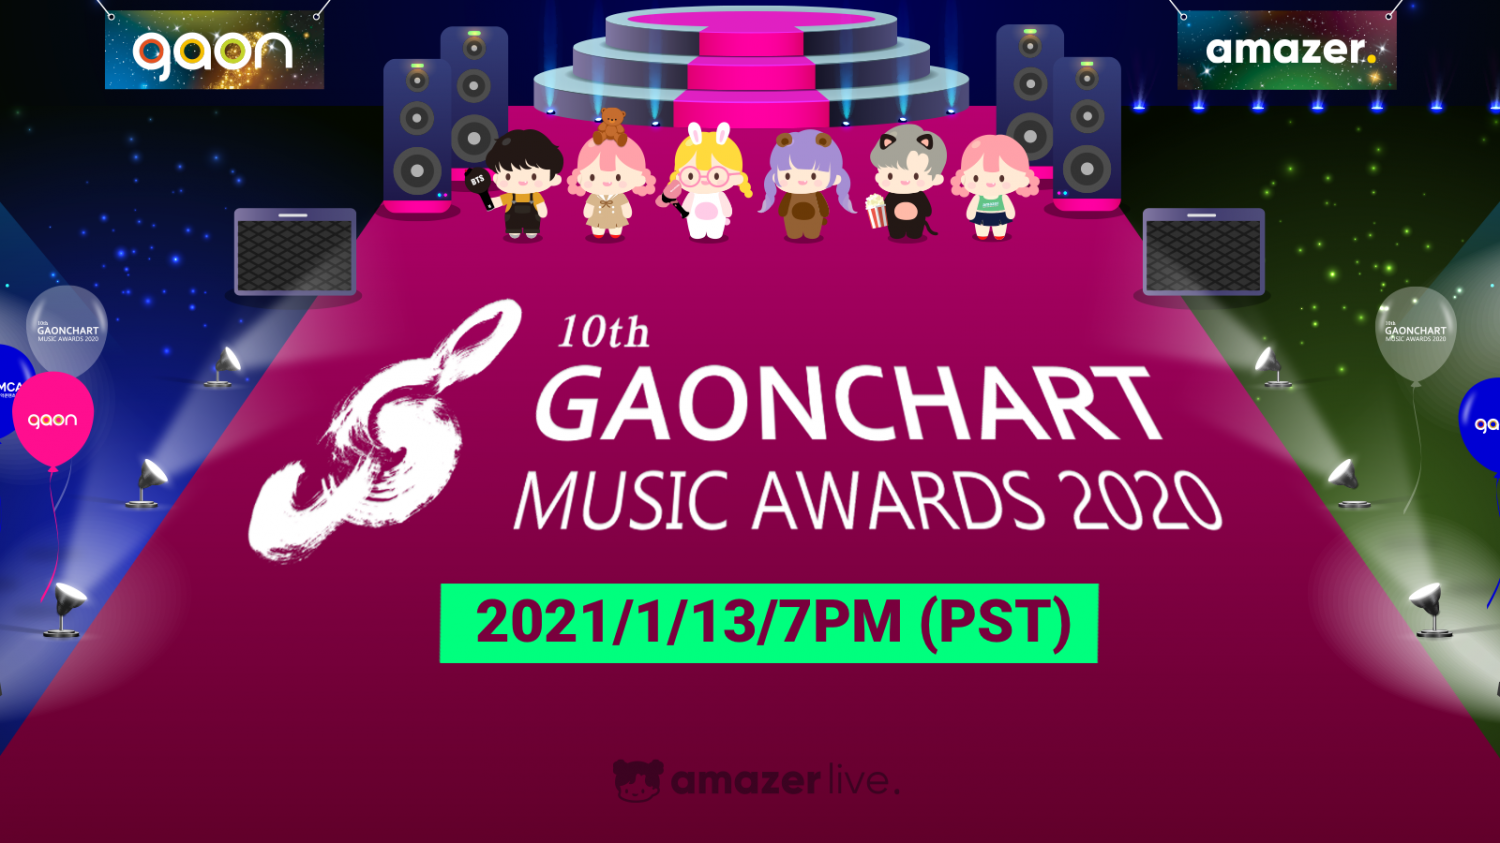 Amazer App Brings the 10th Gaon Chart Music Awards to the World KpopStarz